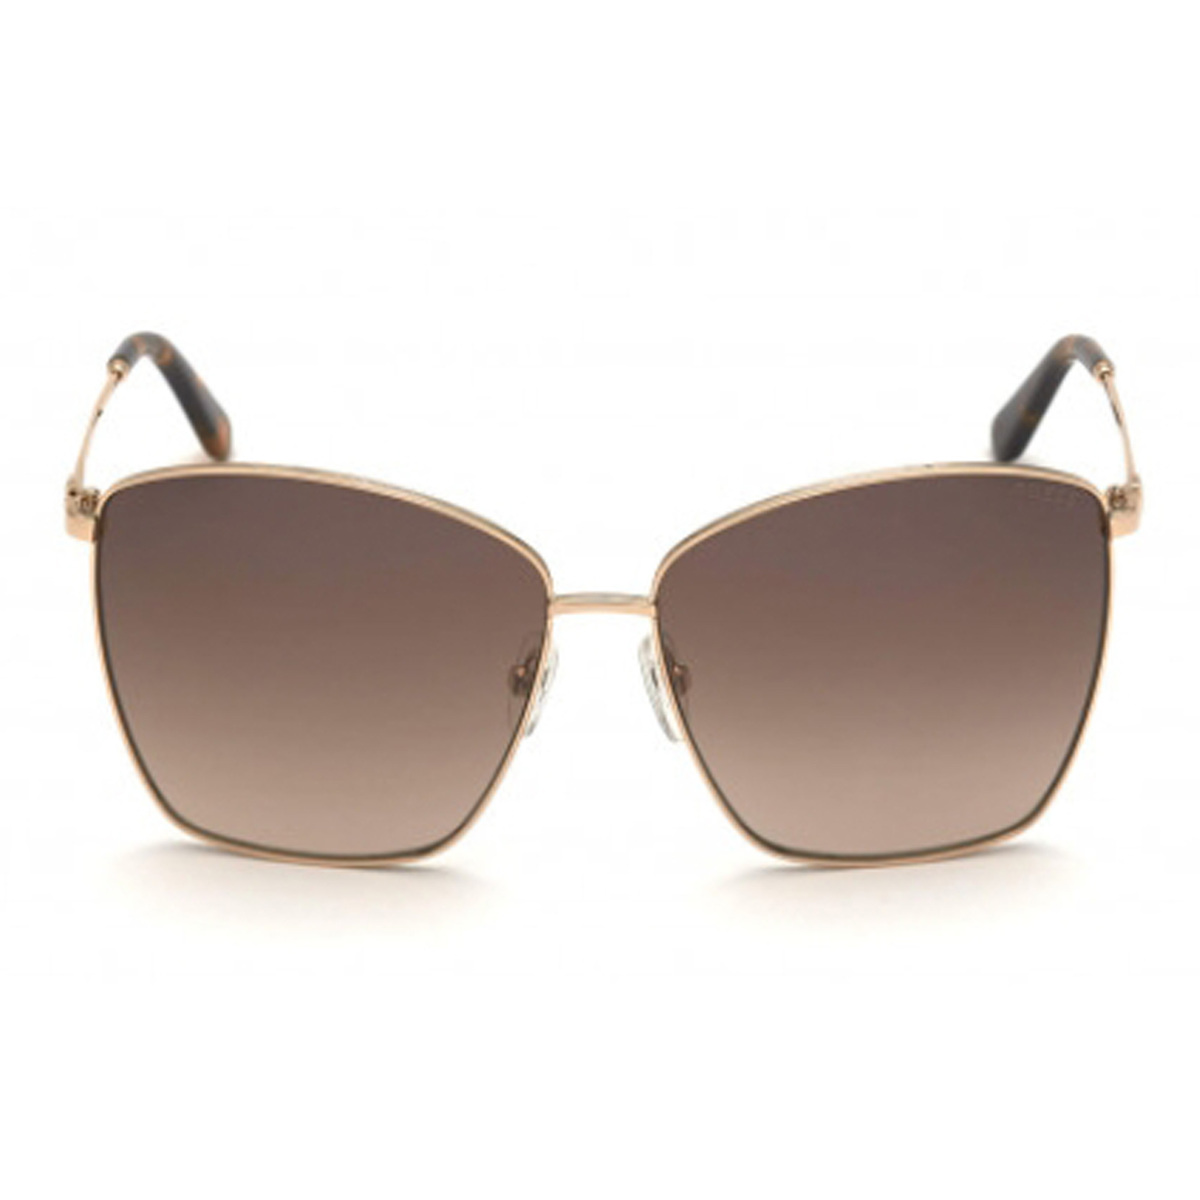 Guess Women's Square Sunglasses, Gradiant Brown, GU7745 32F